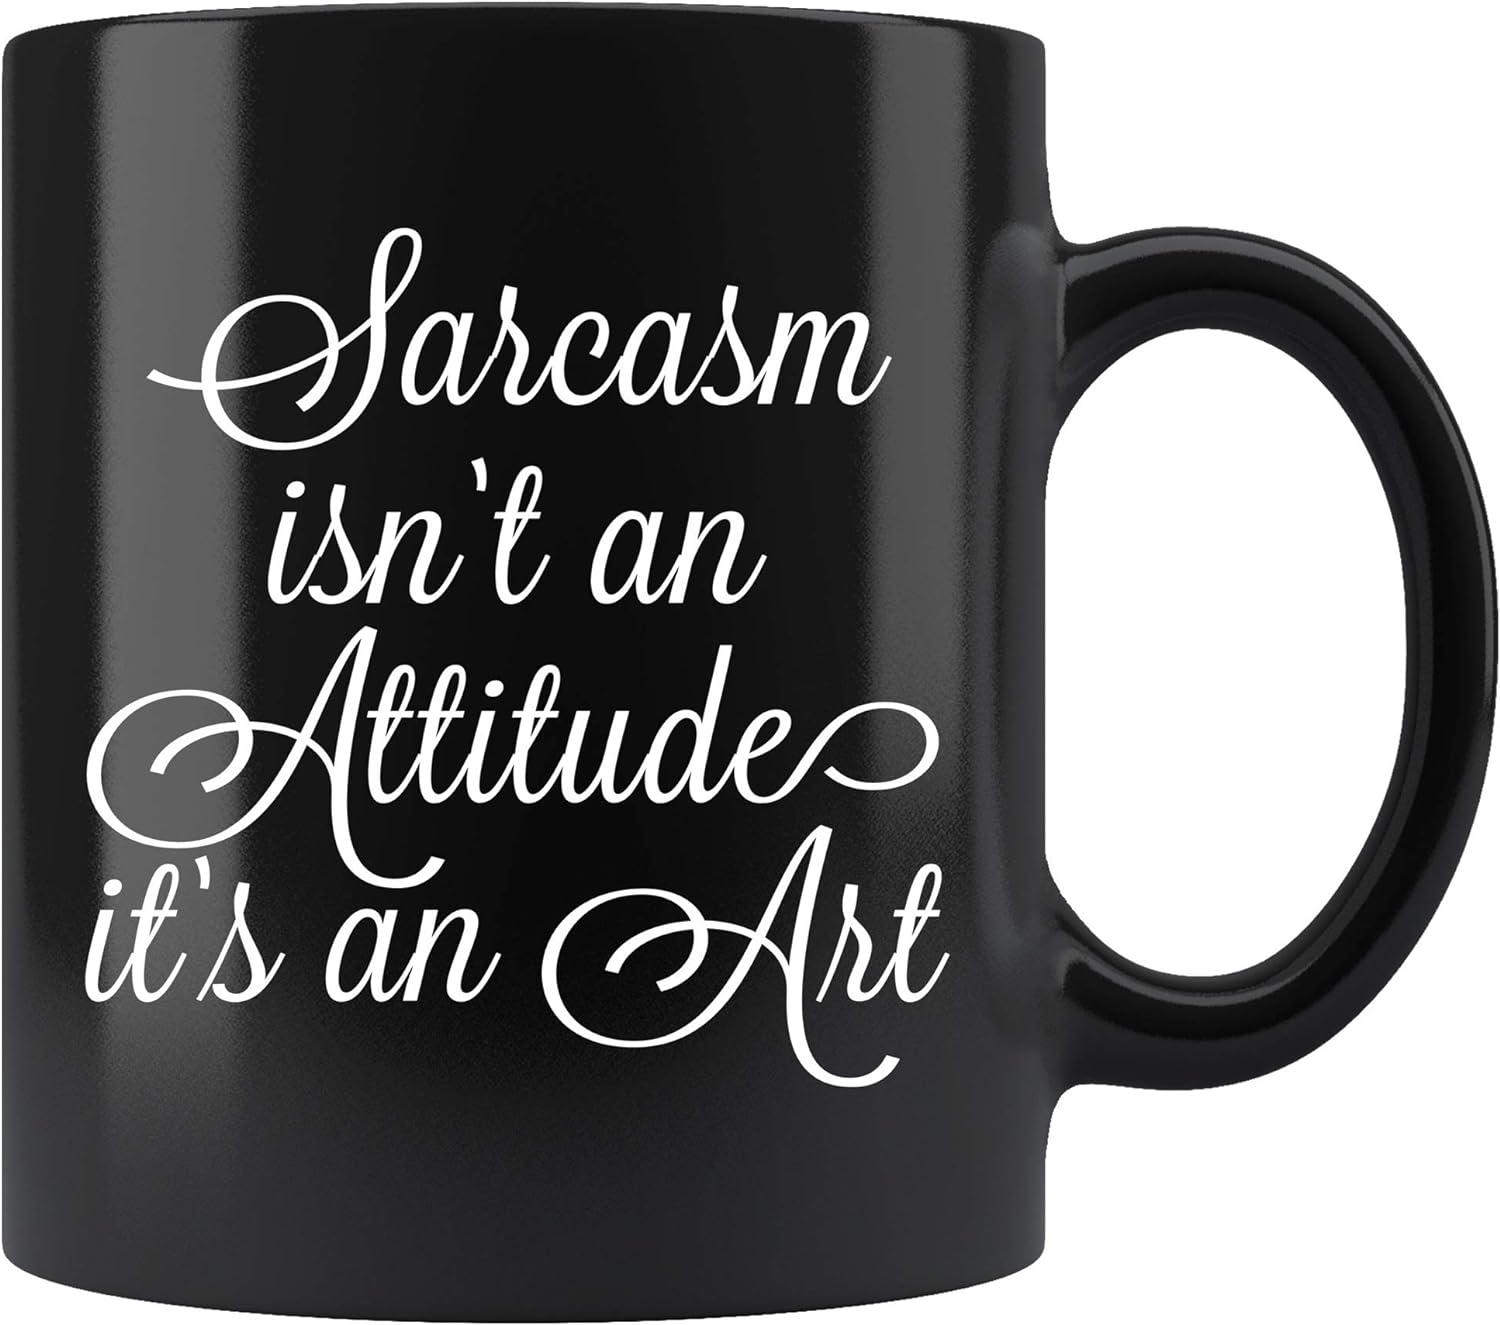 A coffee mug with a sarcastic message.